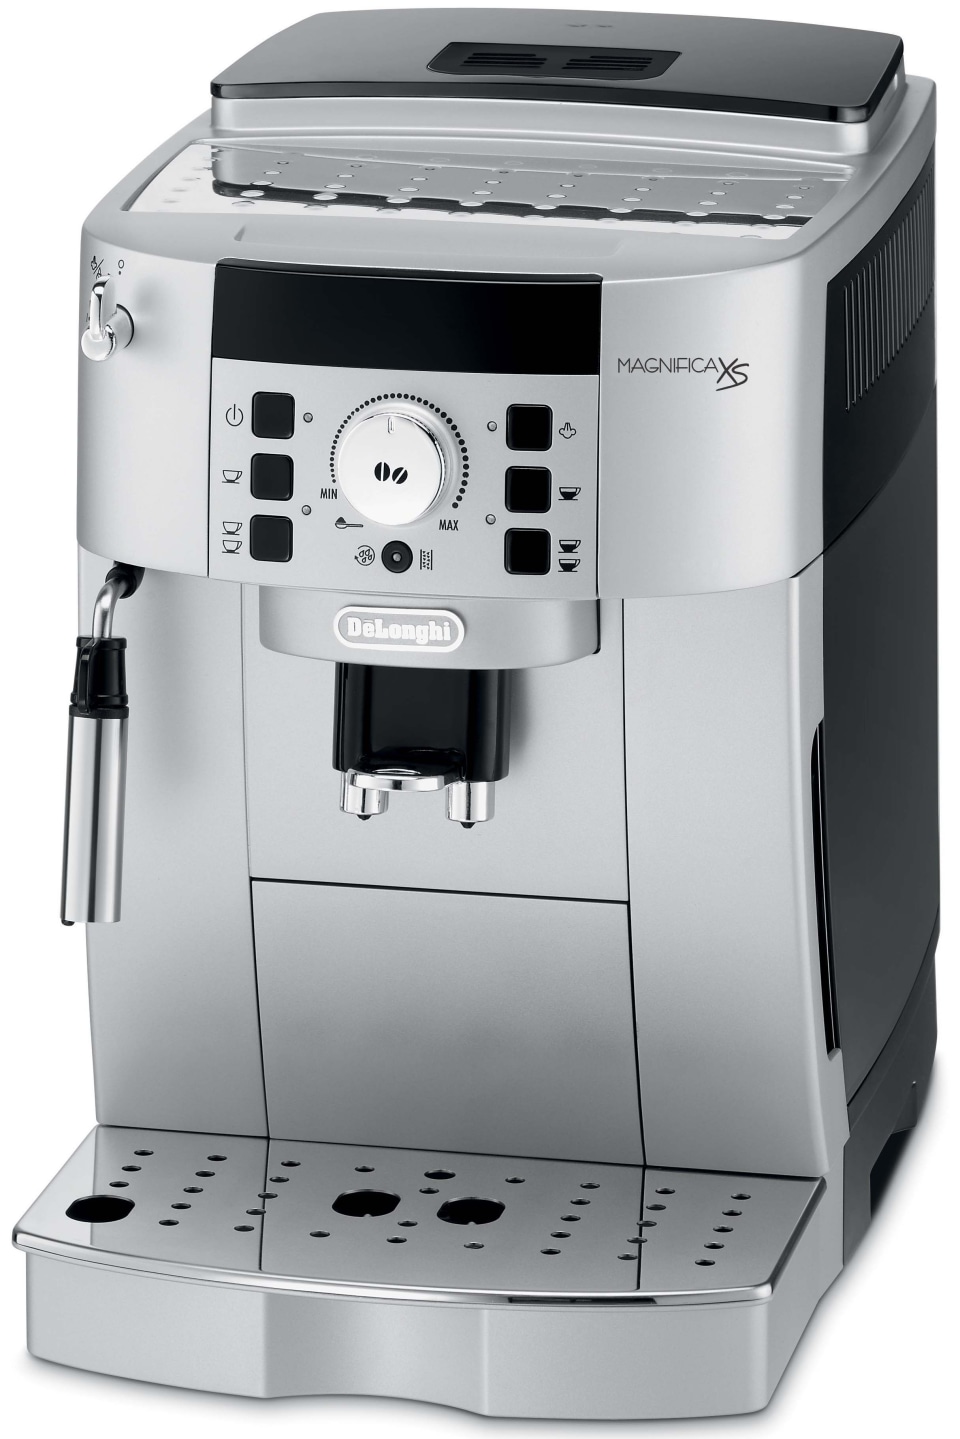 De'Longhi Magnifica Evo Coffee and Espresso Machine Silver ECAM29084SB -  Best Buy